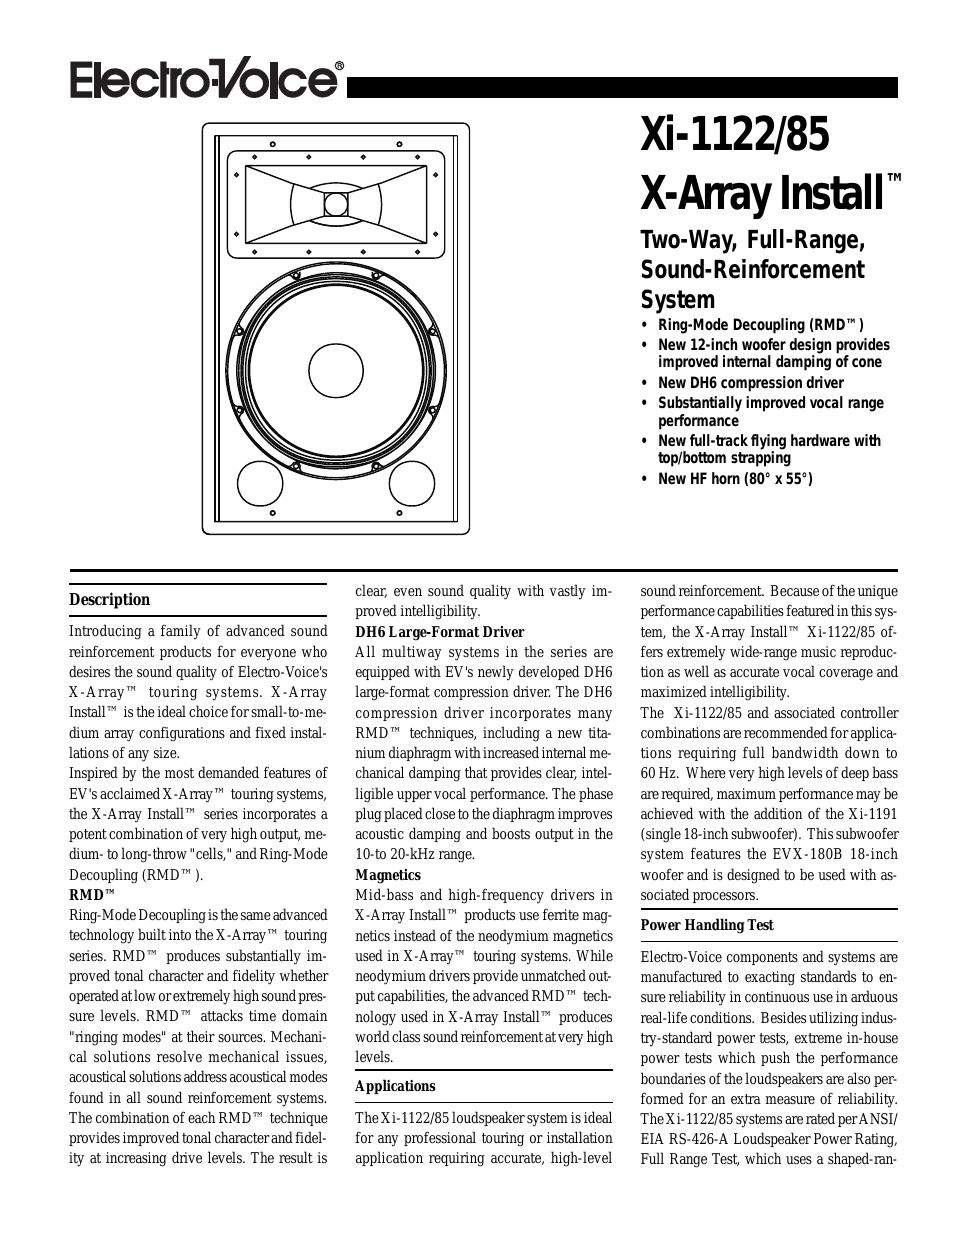 X-Array Install Xi-1122-85